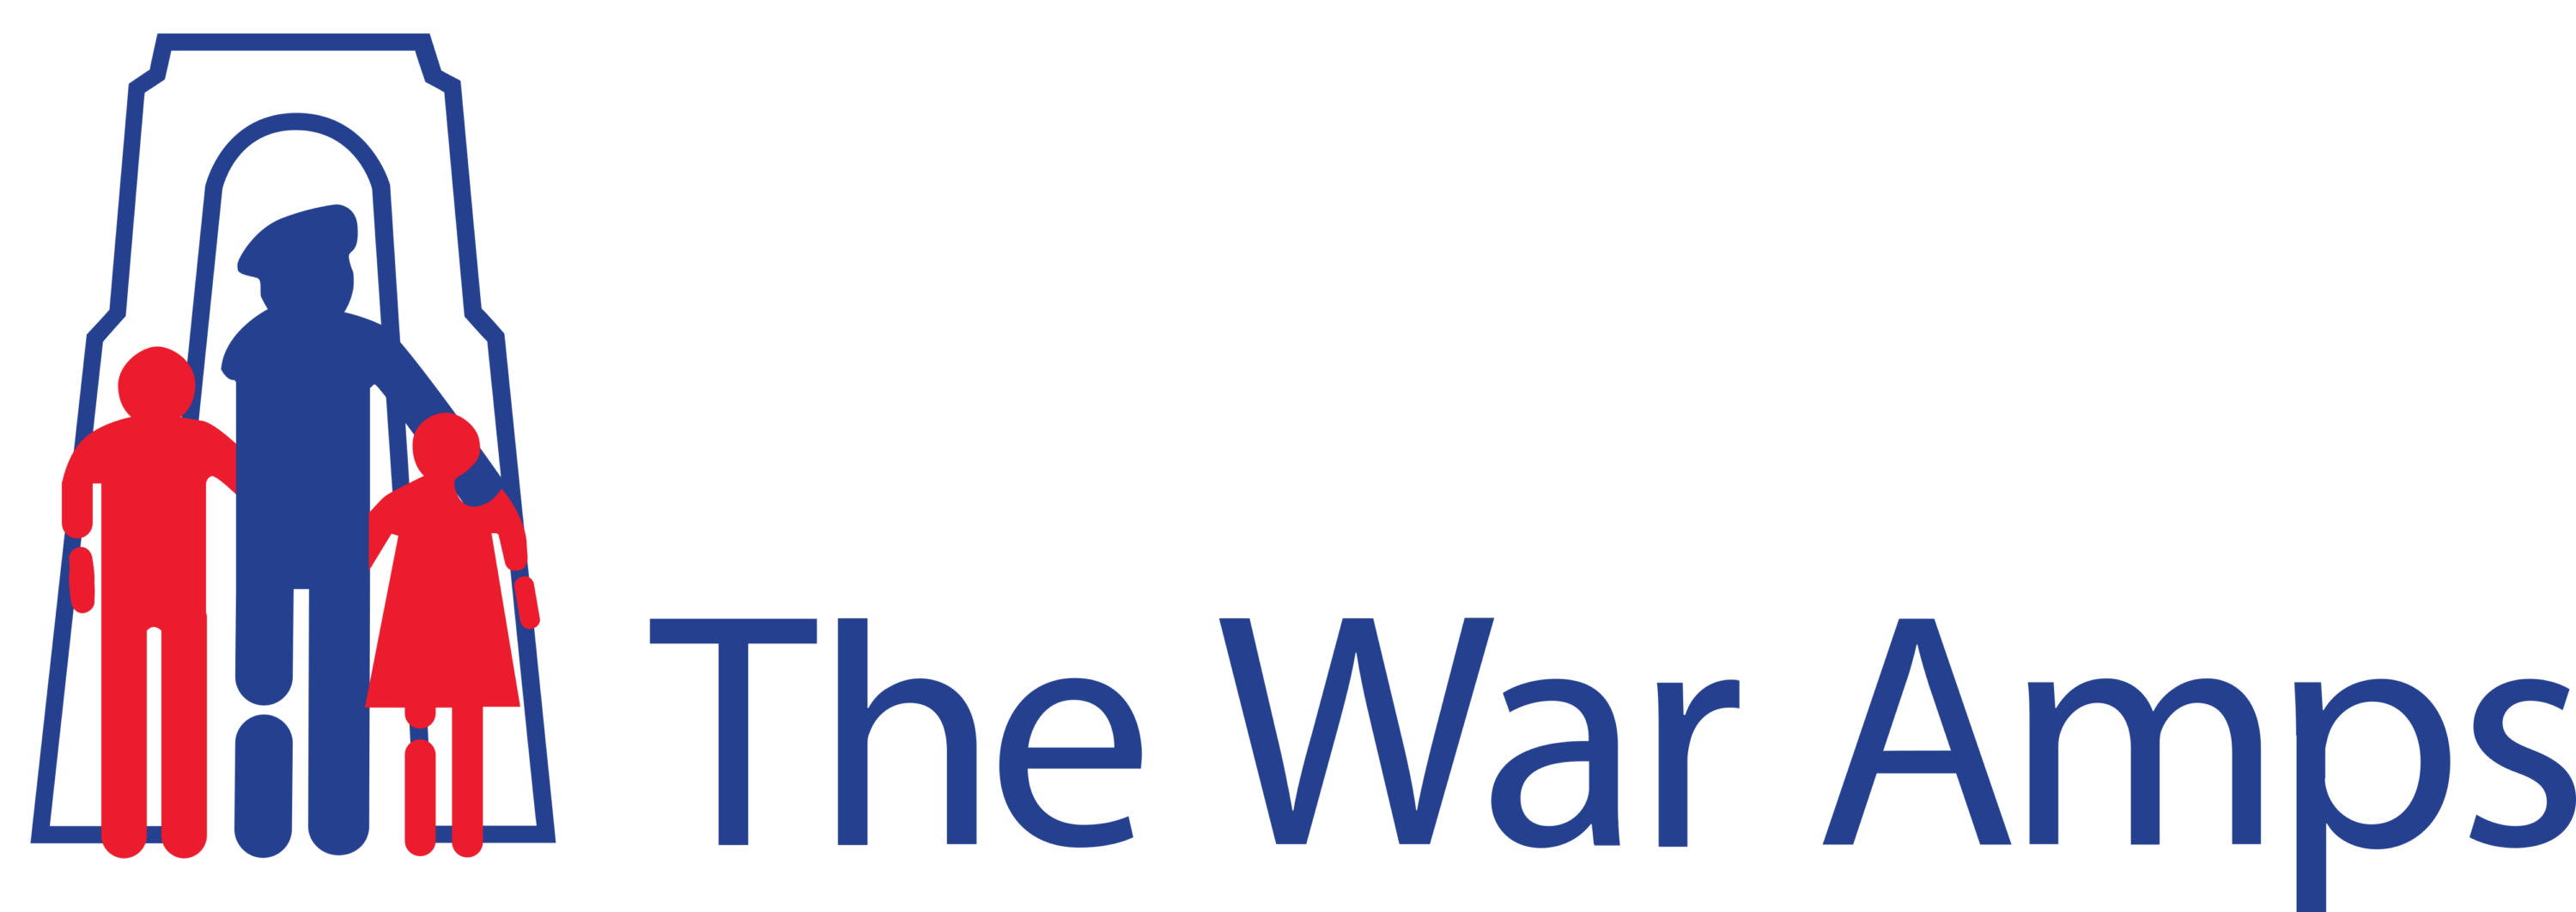 The War Amps Logo